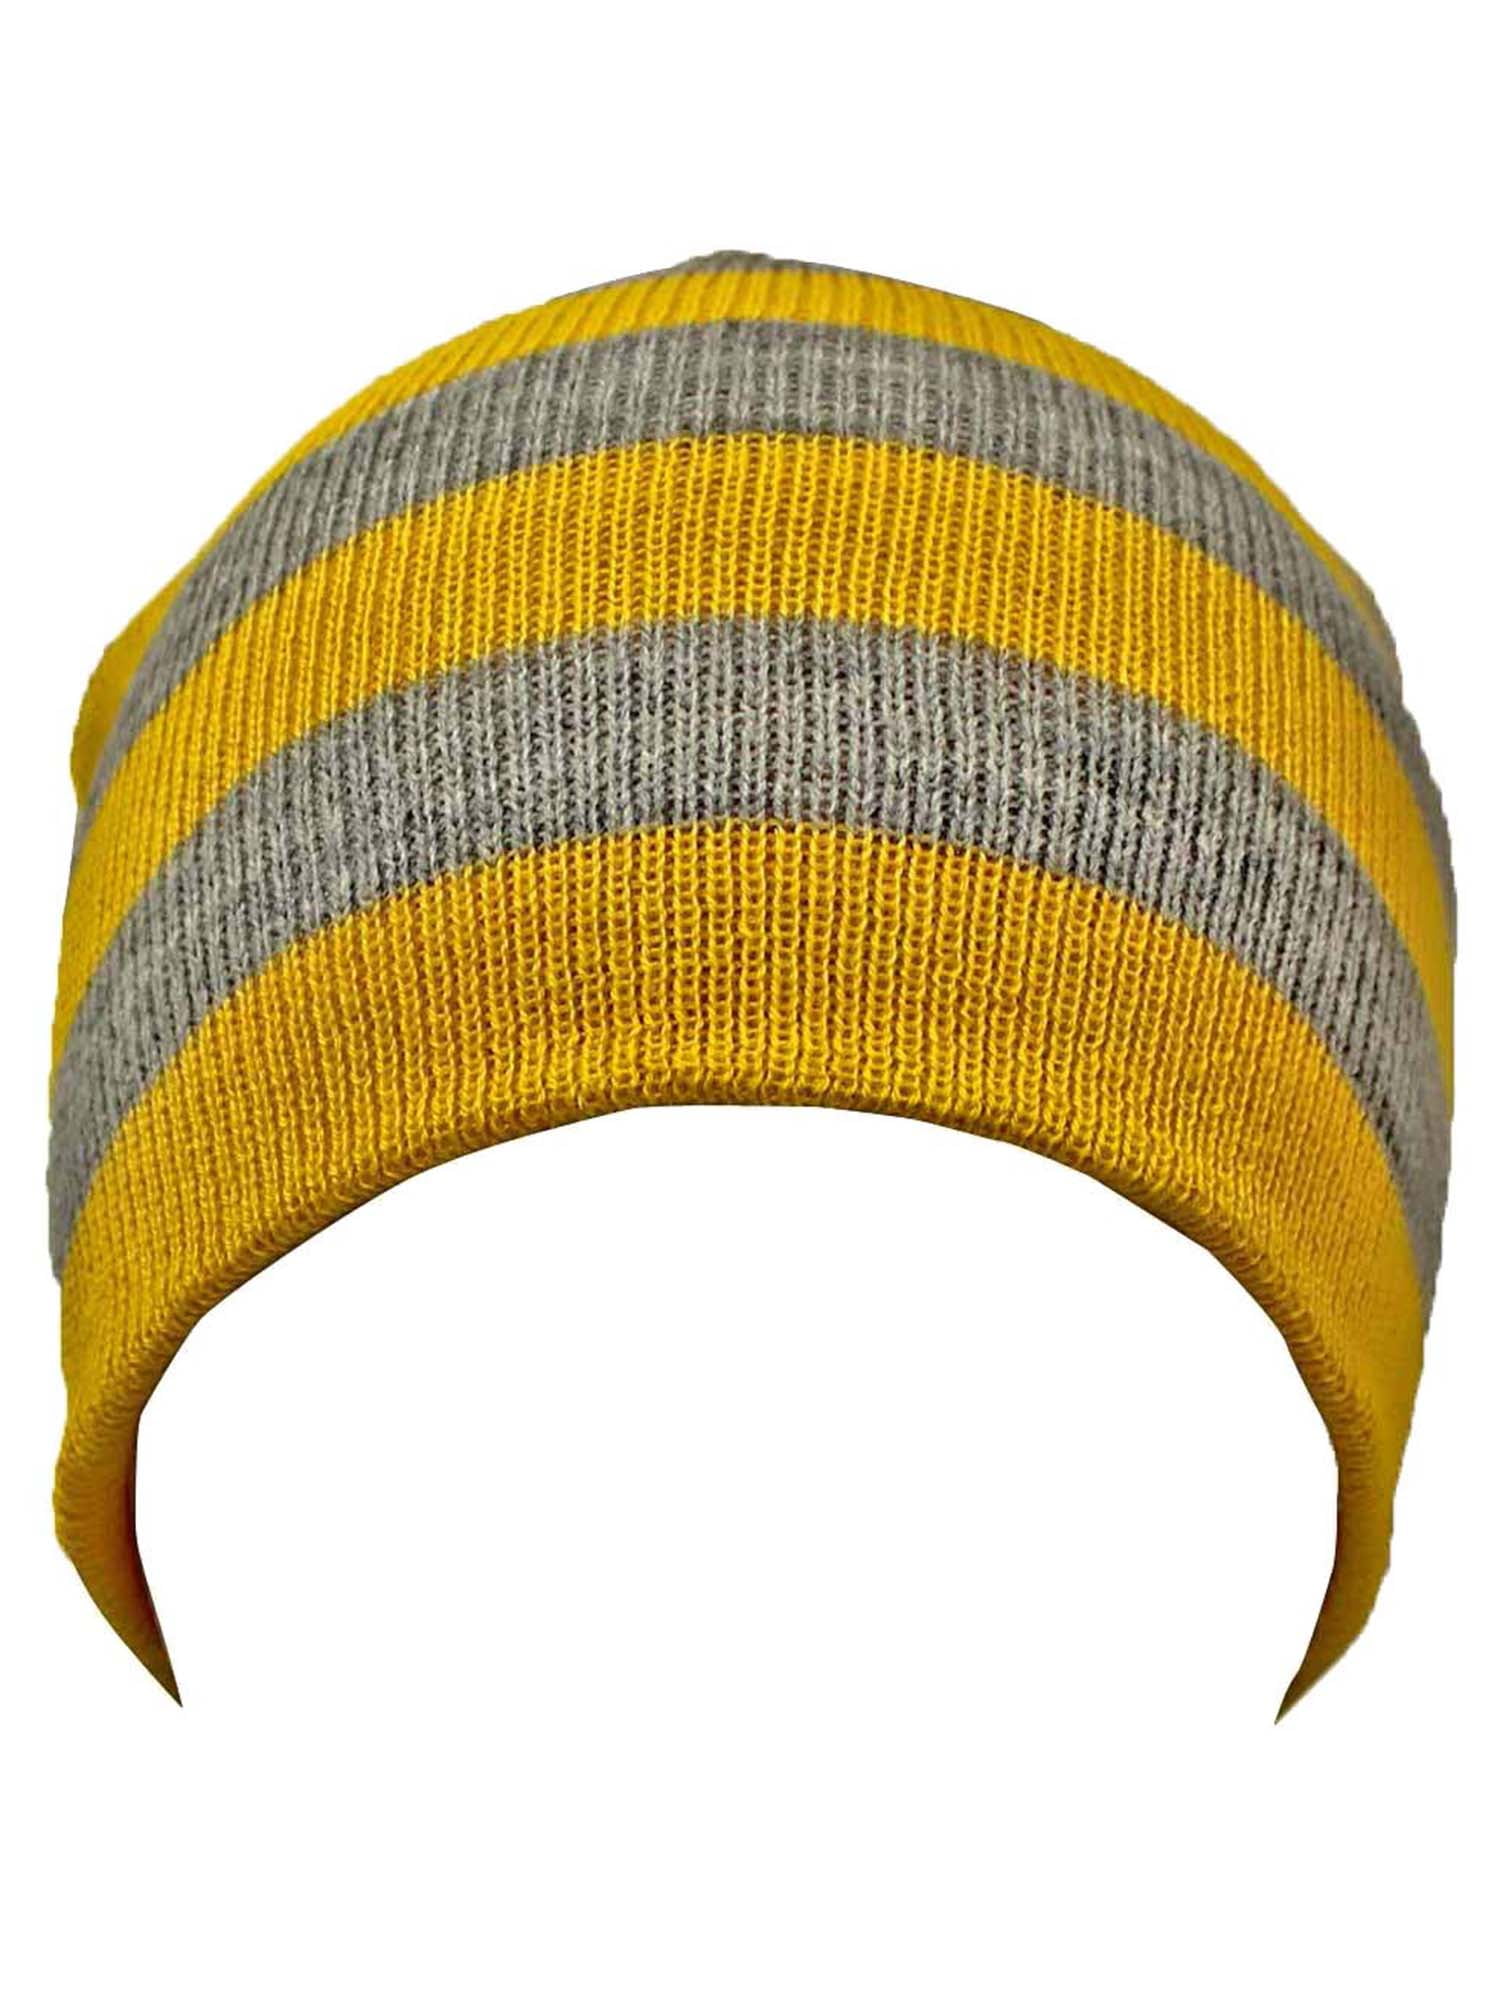 Yellow & Gray Tight Fitting Striped Knit Beanie Cap - Walmart.com